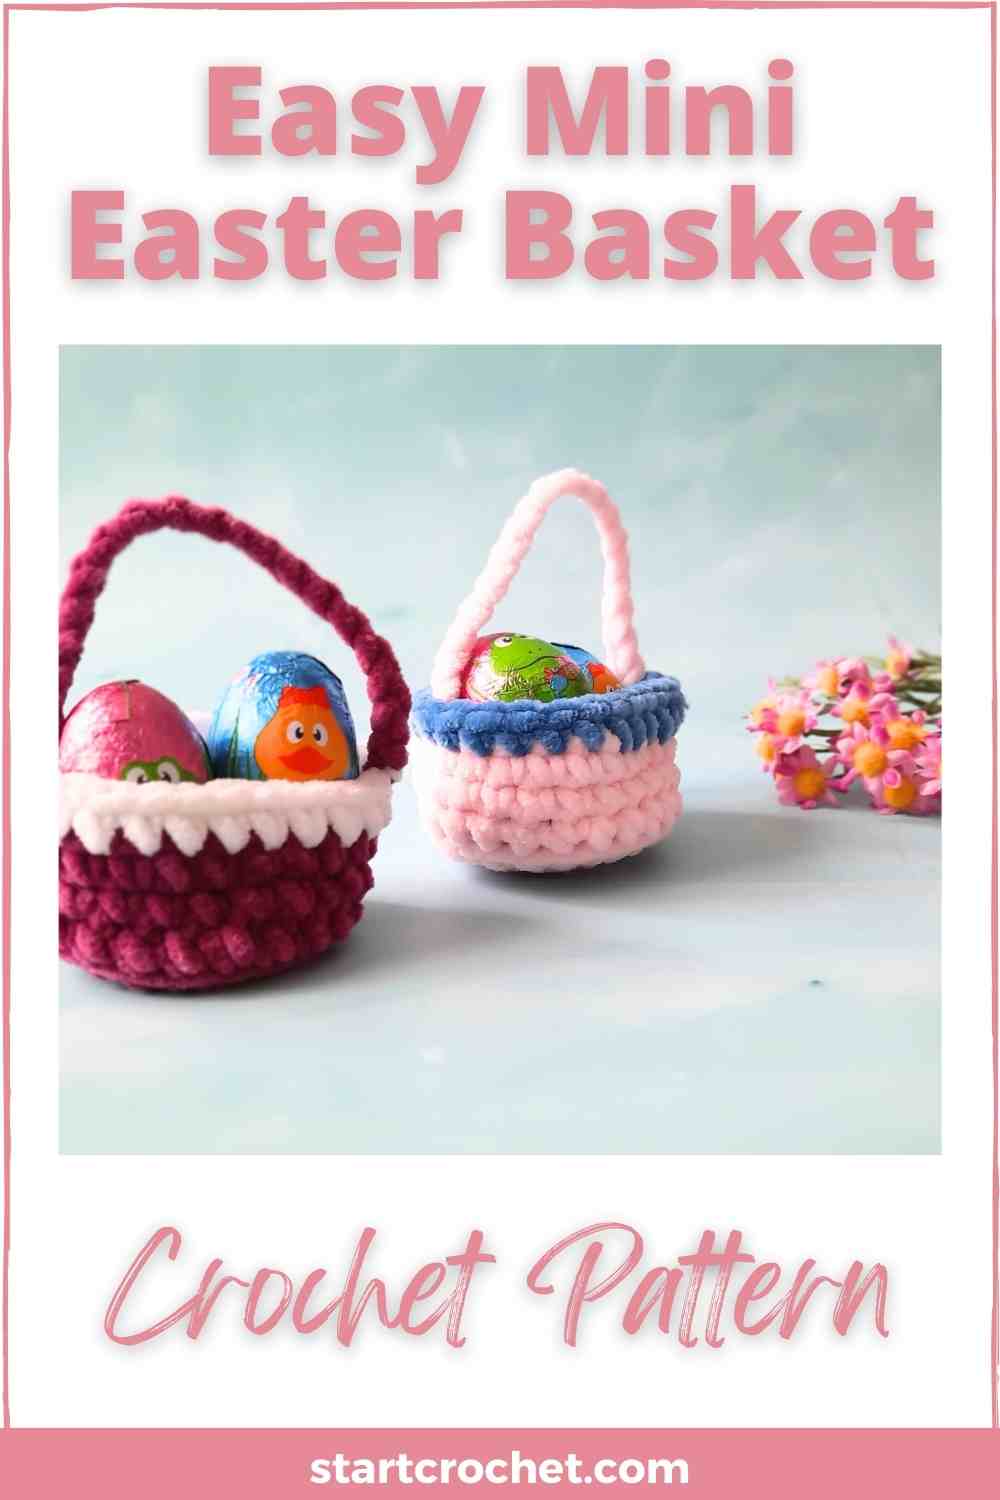 Easy Mini Easter Basket Crochet Pattern Pin